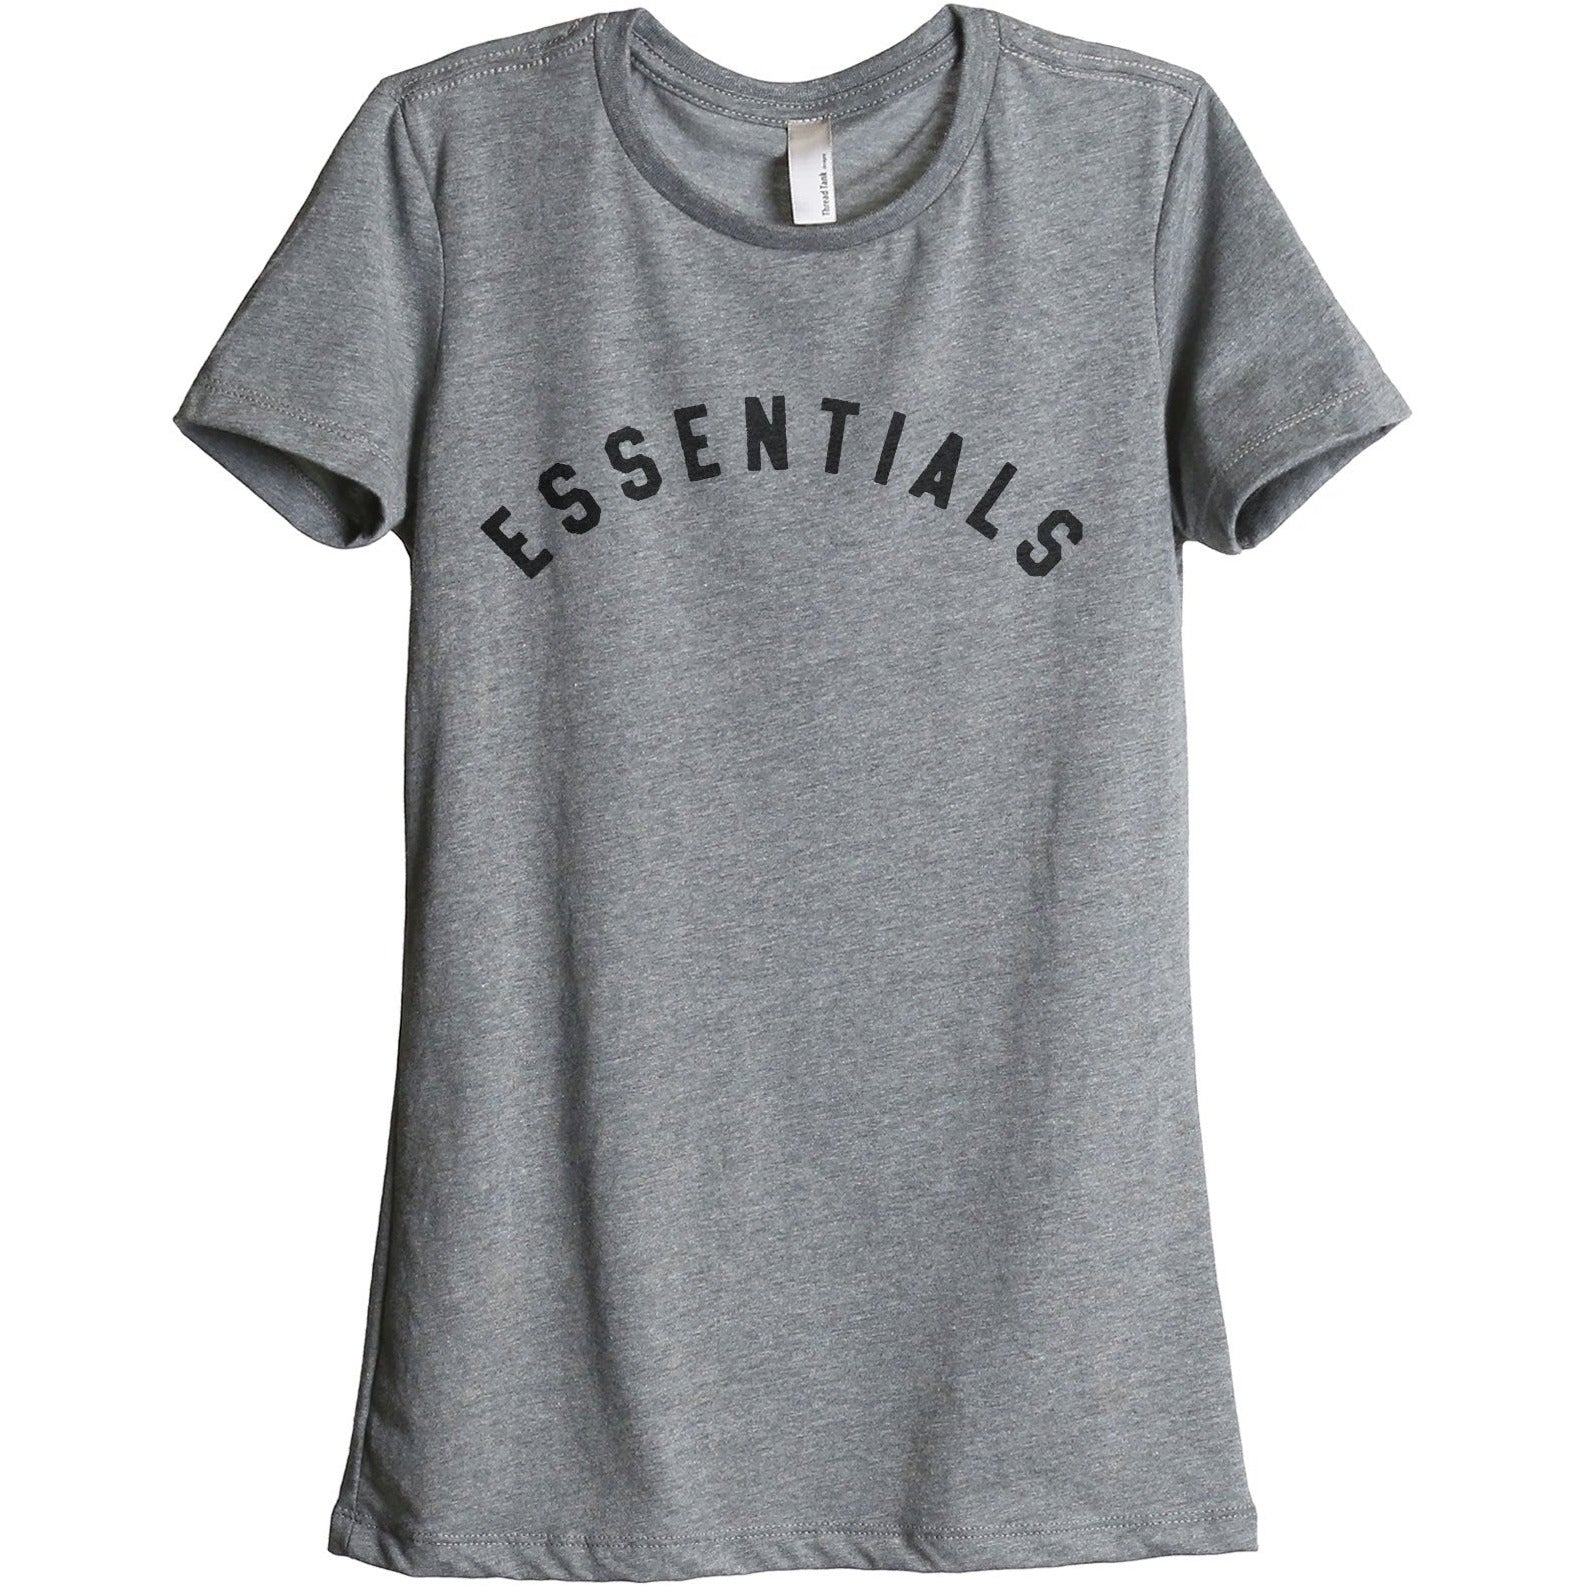 Essentials Women's Relaxed Crewneck T-Shirt Top Tee Heather Grey